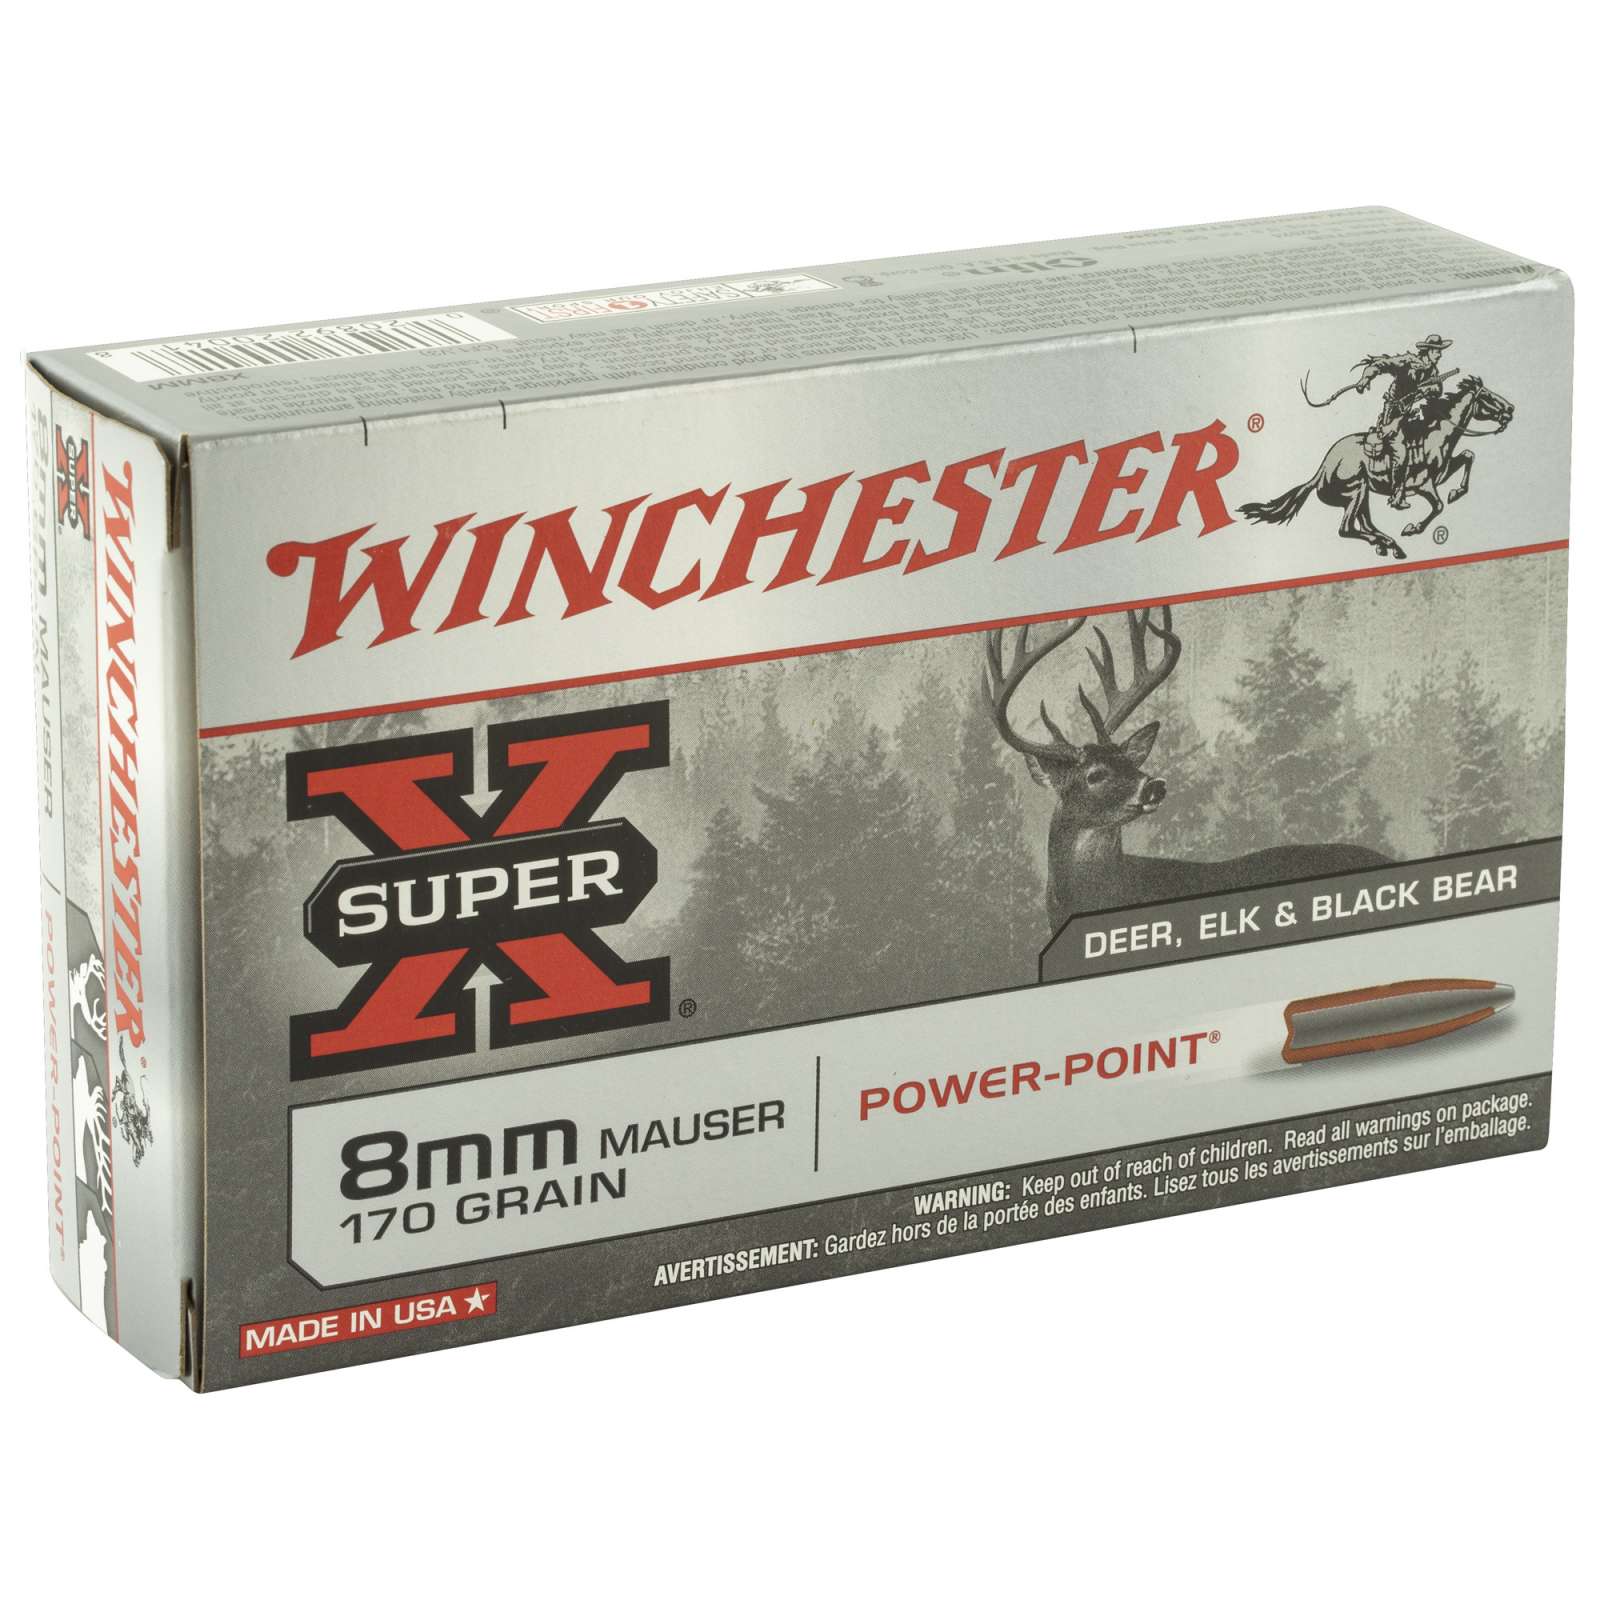 Range (PP) X8MM Ammo 20 USA 10 170 | Winchester gr 8mm Cs Mauser Super-X Power-Point Bx/